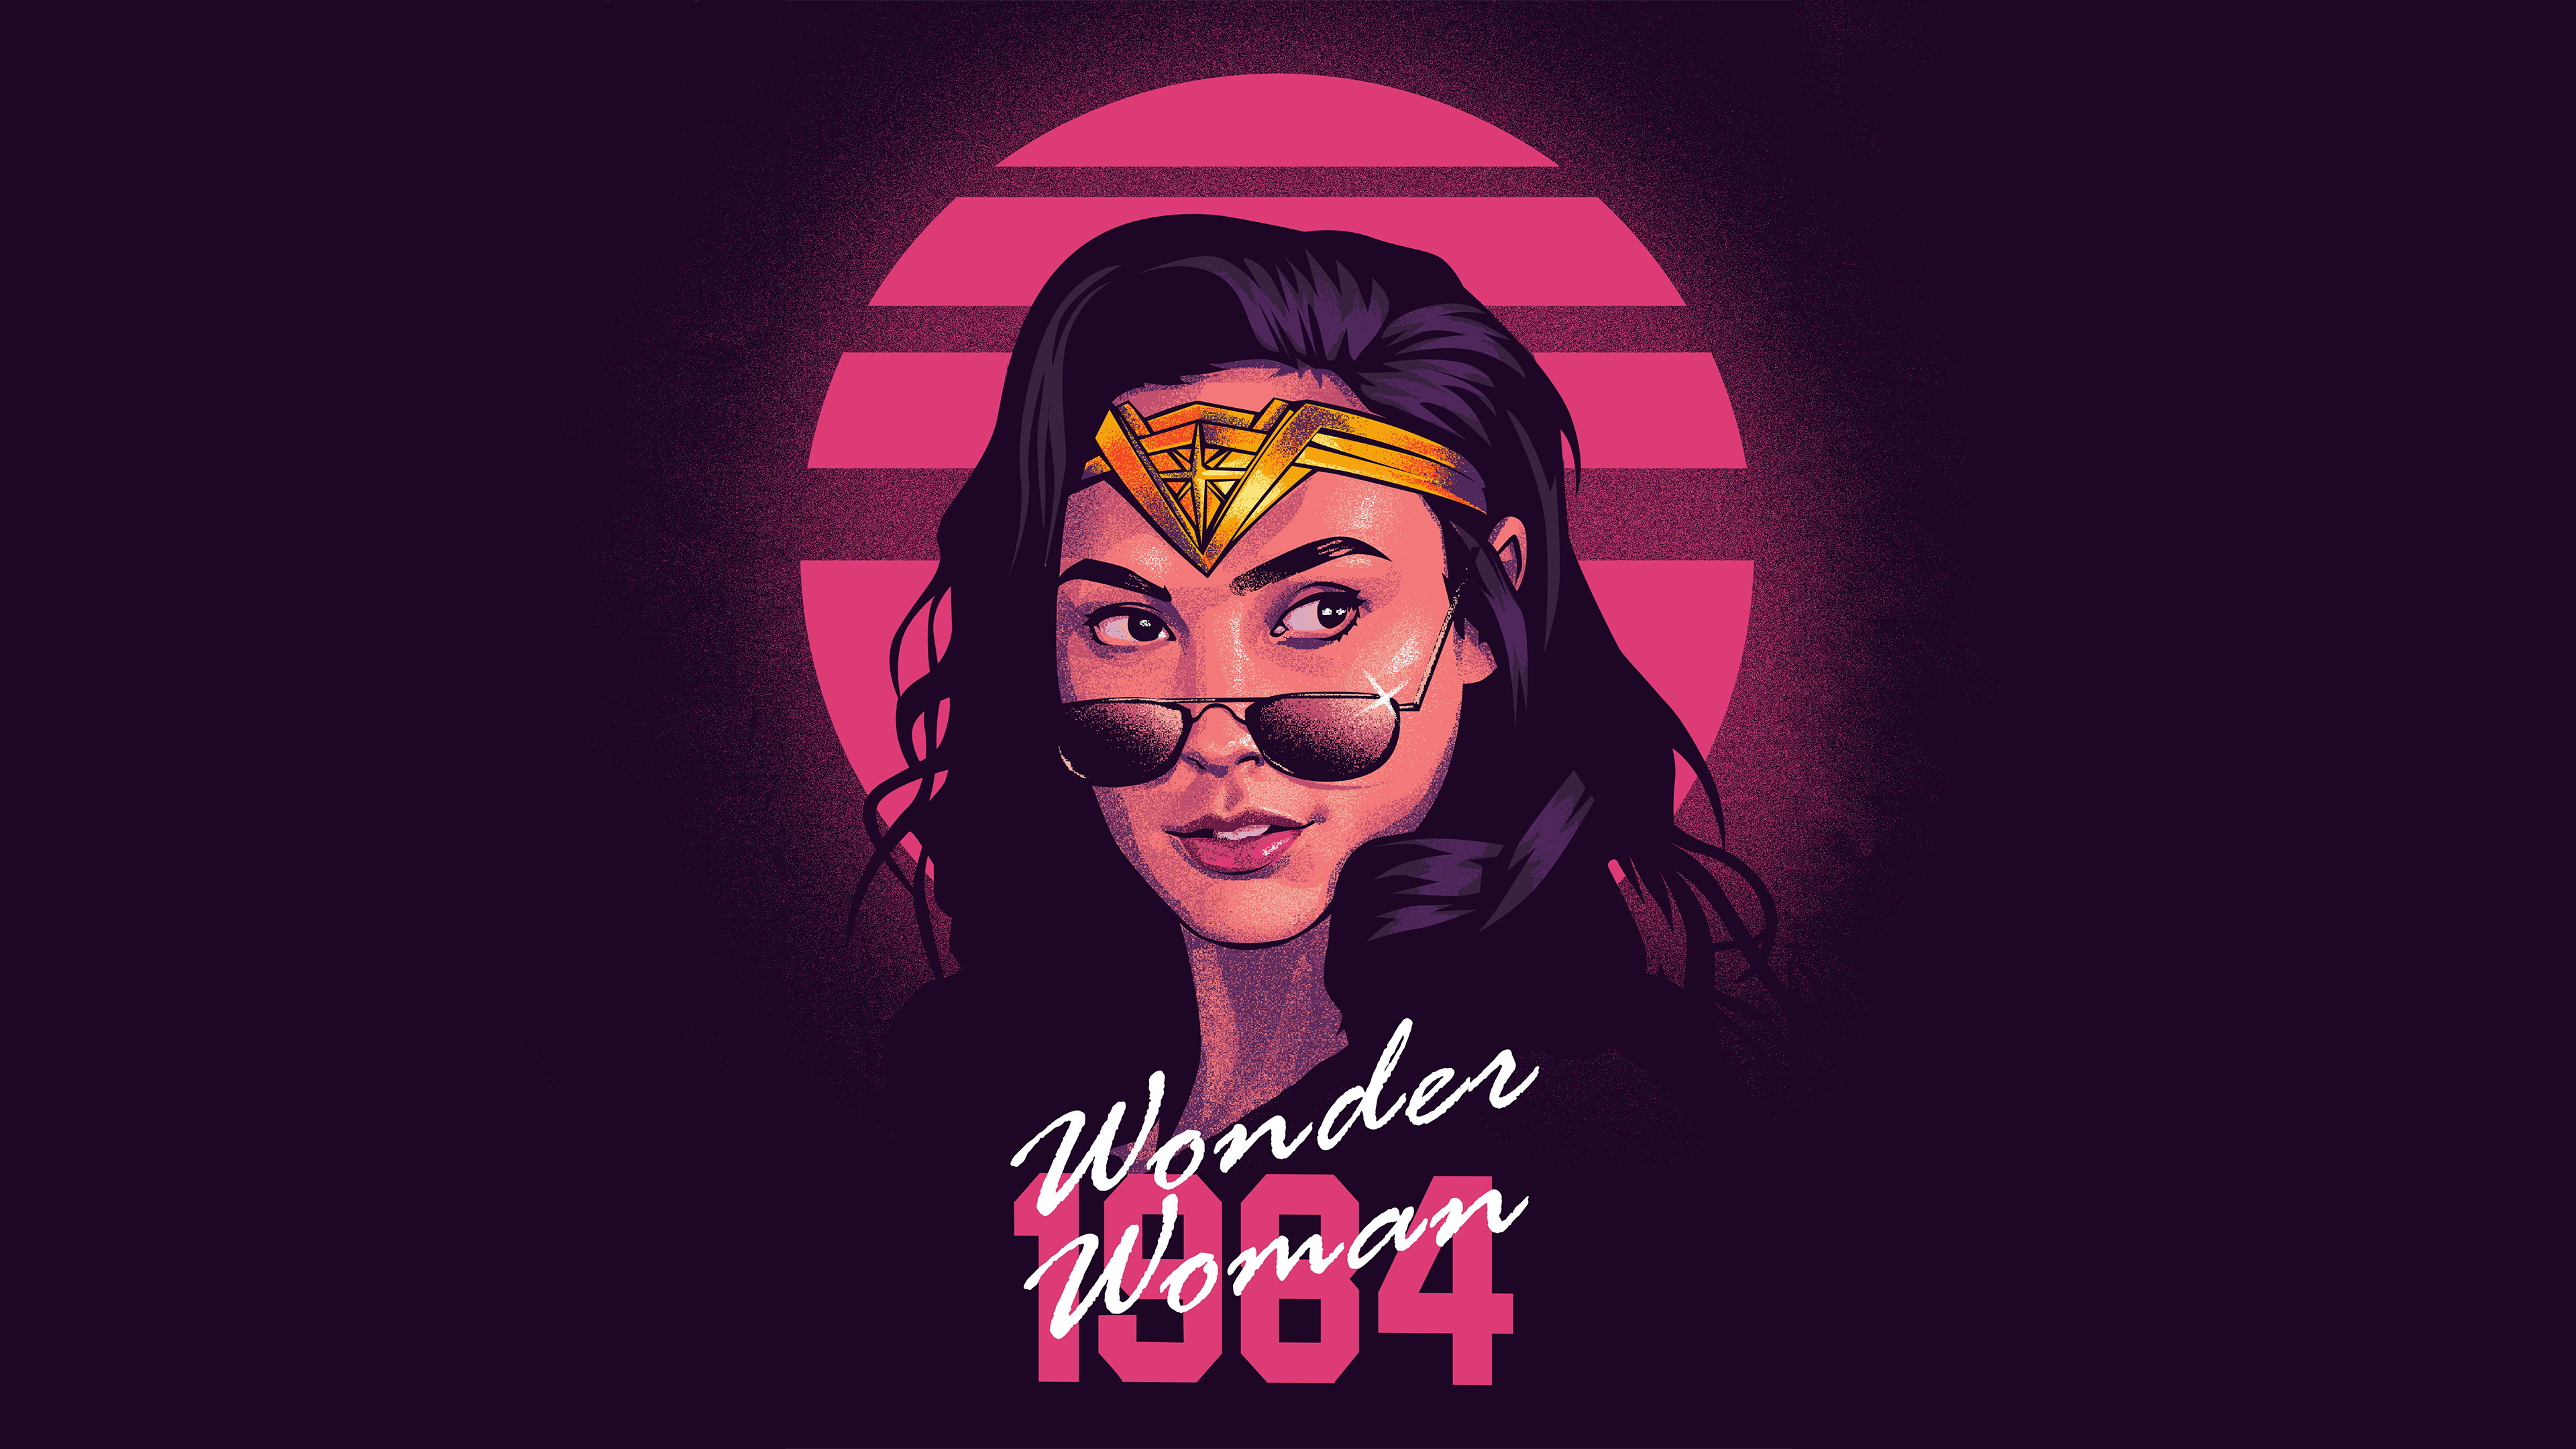 Wonder Woman 2021 1984 Superhero Movies 4K Gal Gadot Artwork 3840x2160